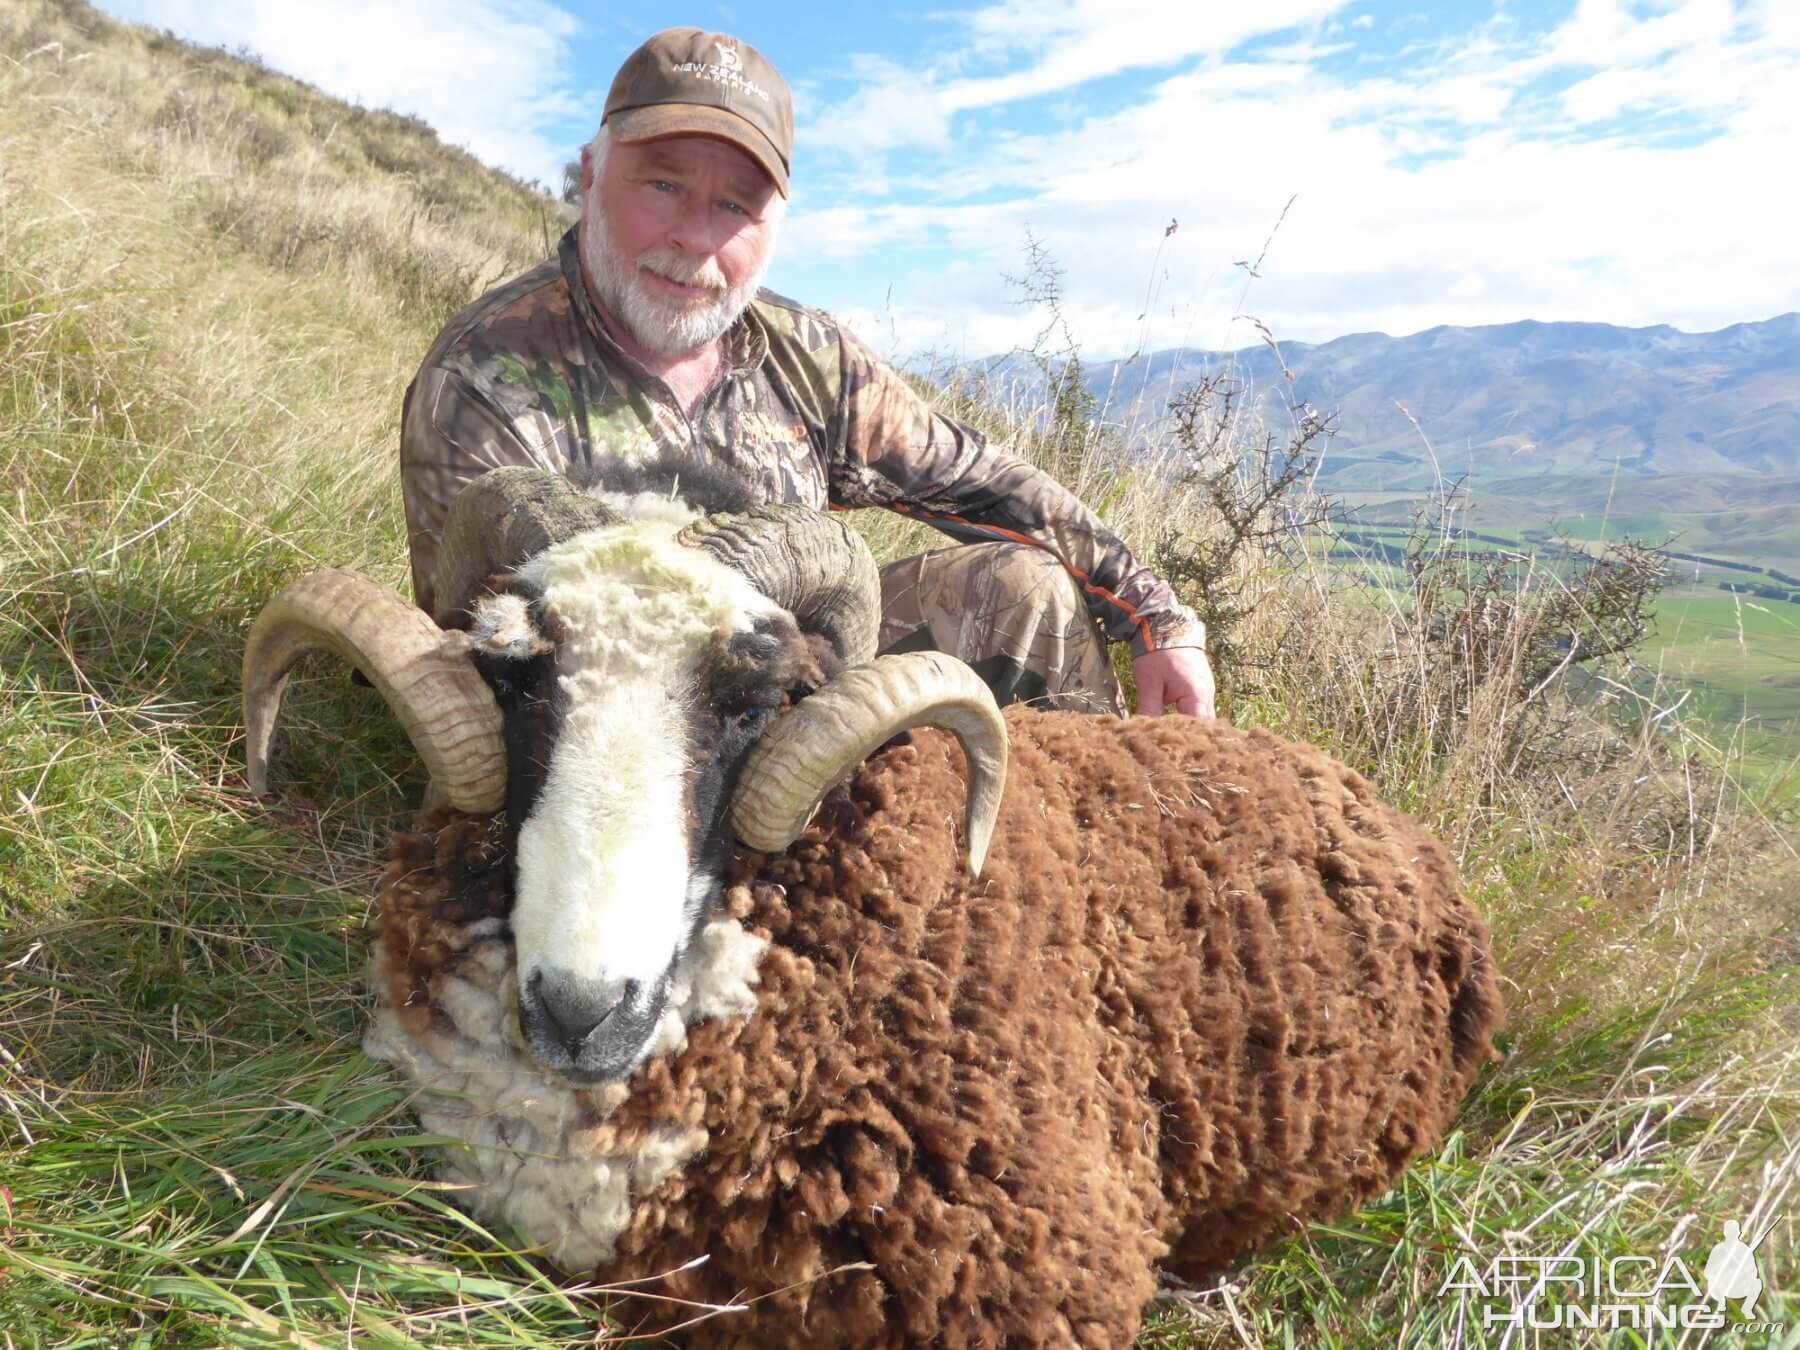 Hunting Arapawa Ram in New Zealand